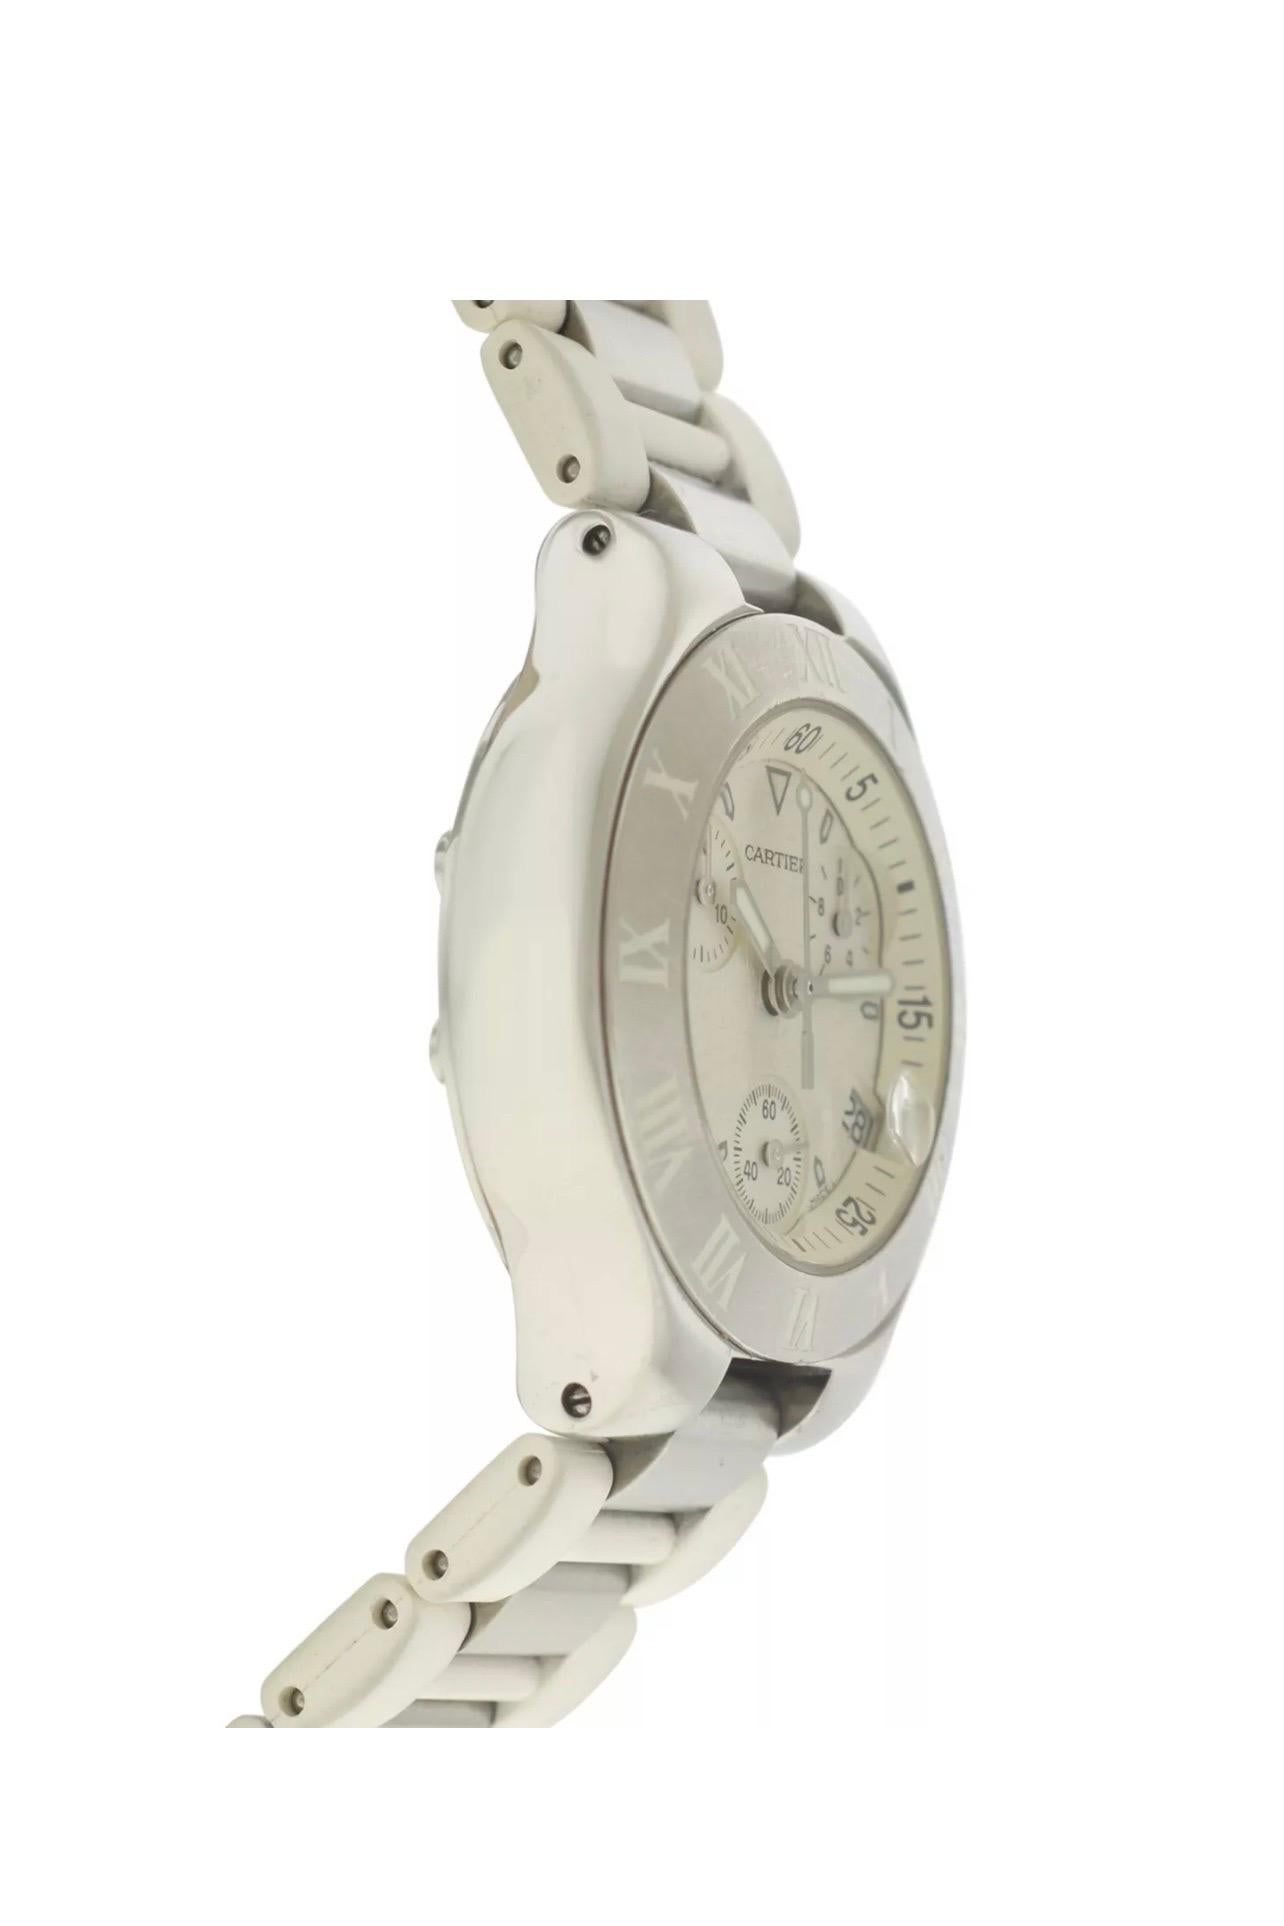 Cartier Chronoscaph Cream Women's Rubber Strap Watch, 2996 For Sale 8